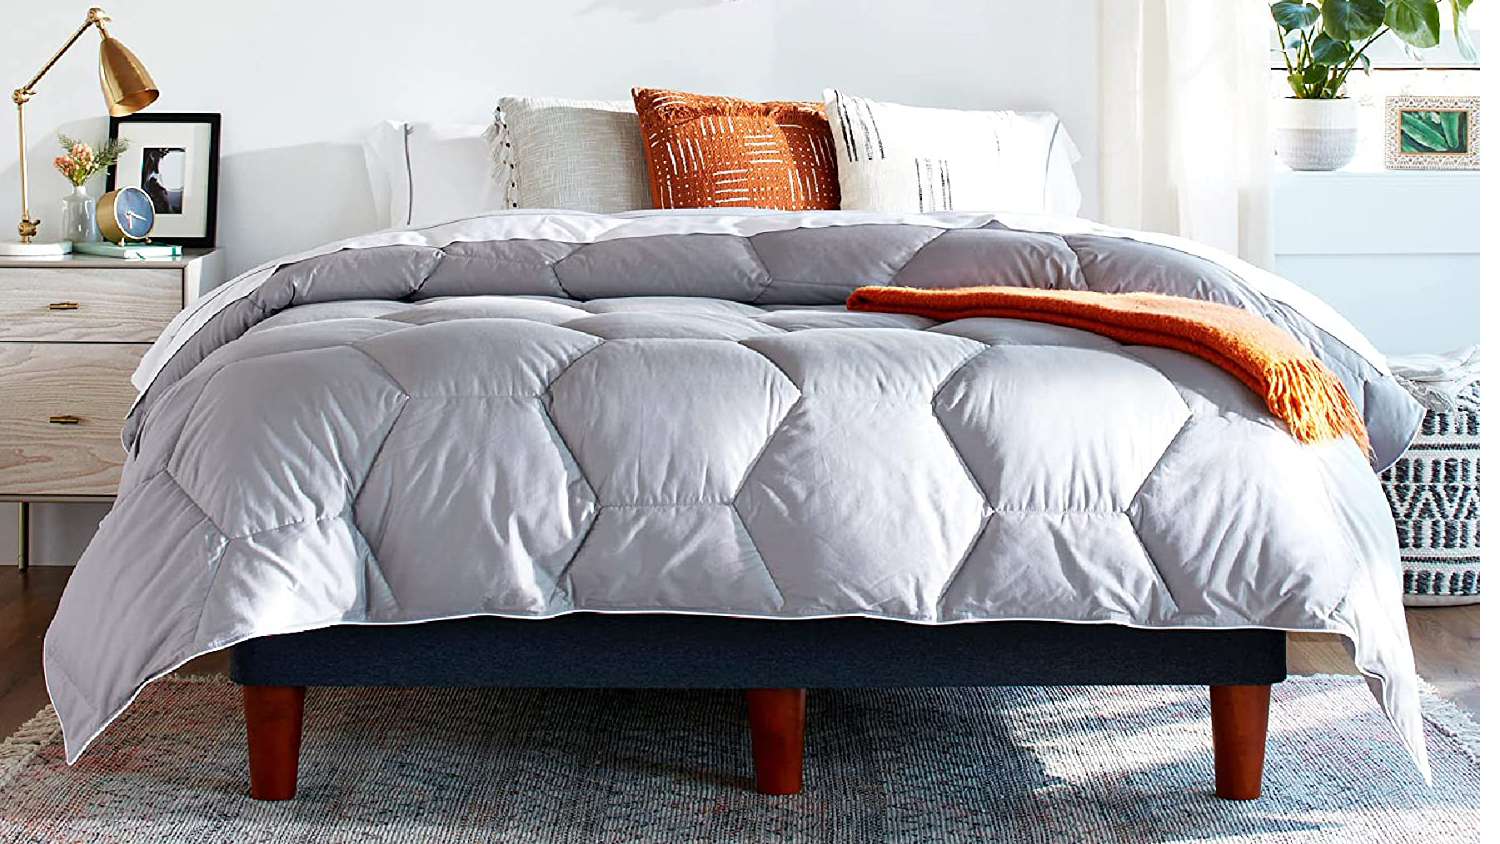 Utopia Bedding King/California King Size Comforter Set with 2 Pillow Shams  - Bedding Comforter Sets - Down Alternative Grey Comforter - Soft and